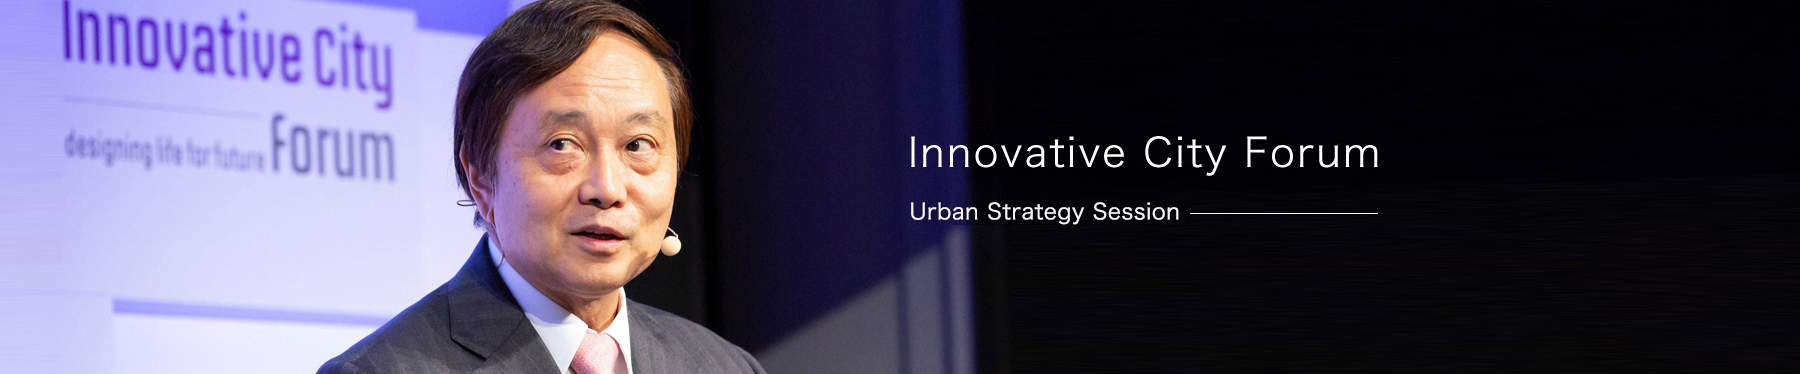 Innovative City Forum(ICF)Urban Strategy Session